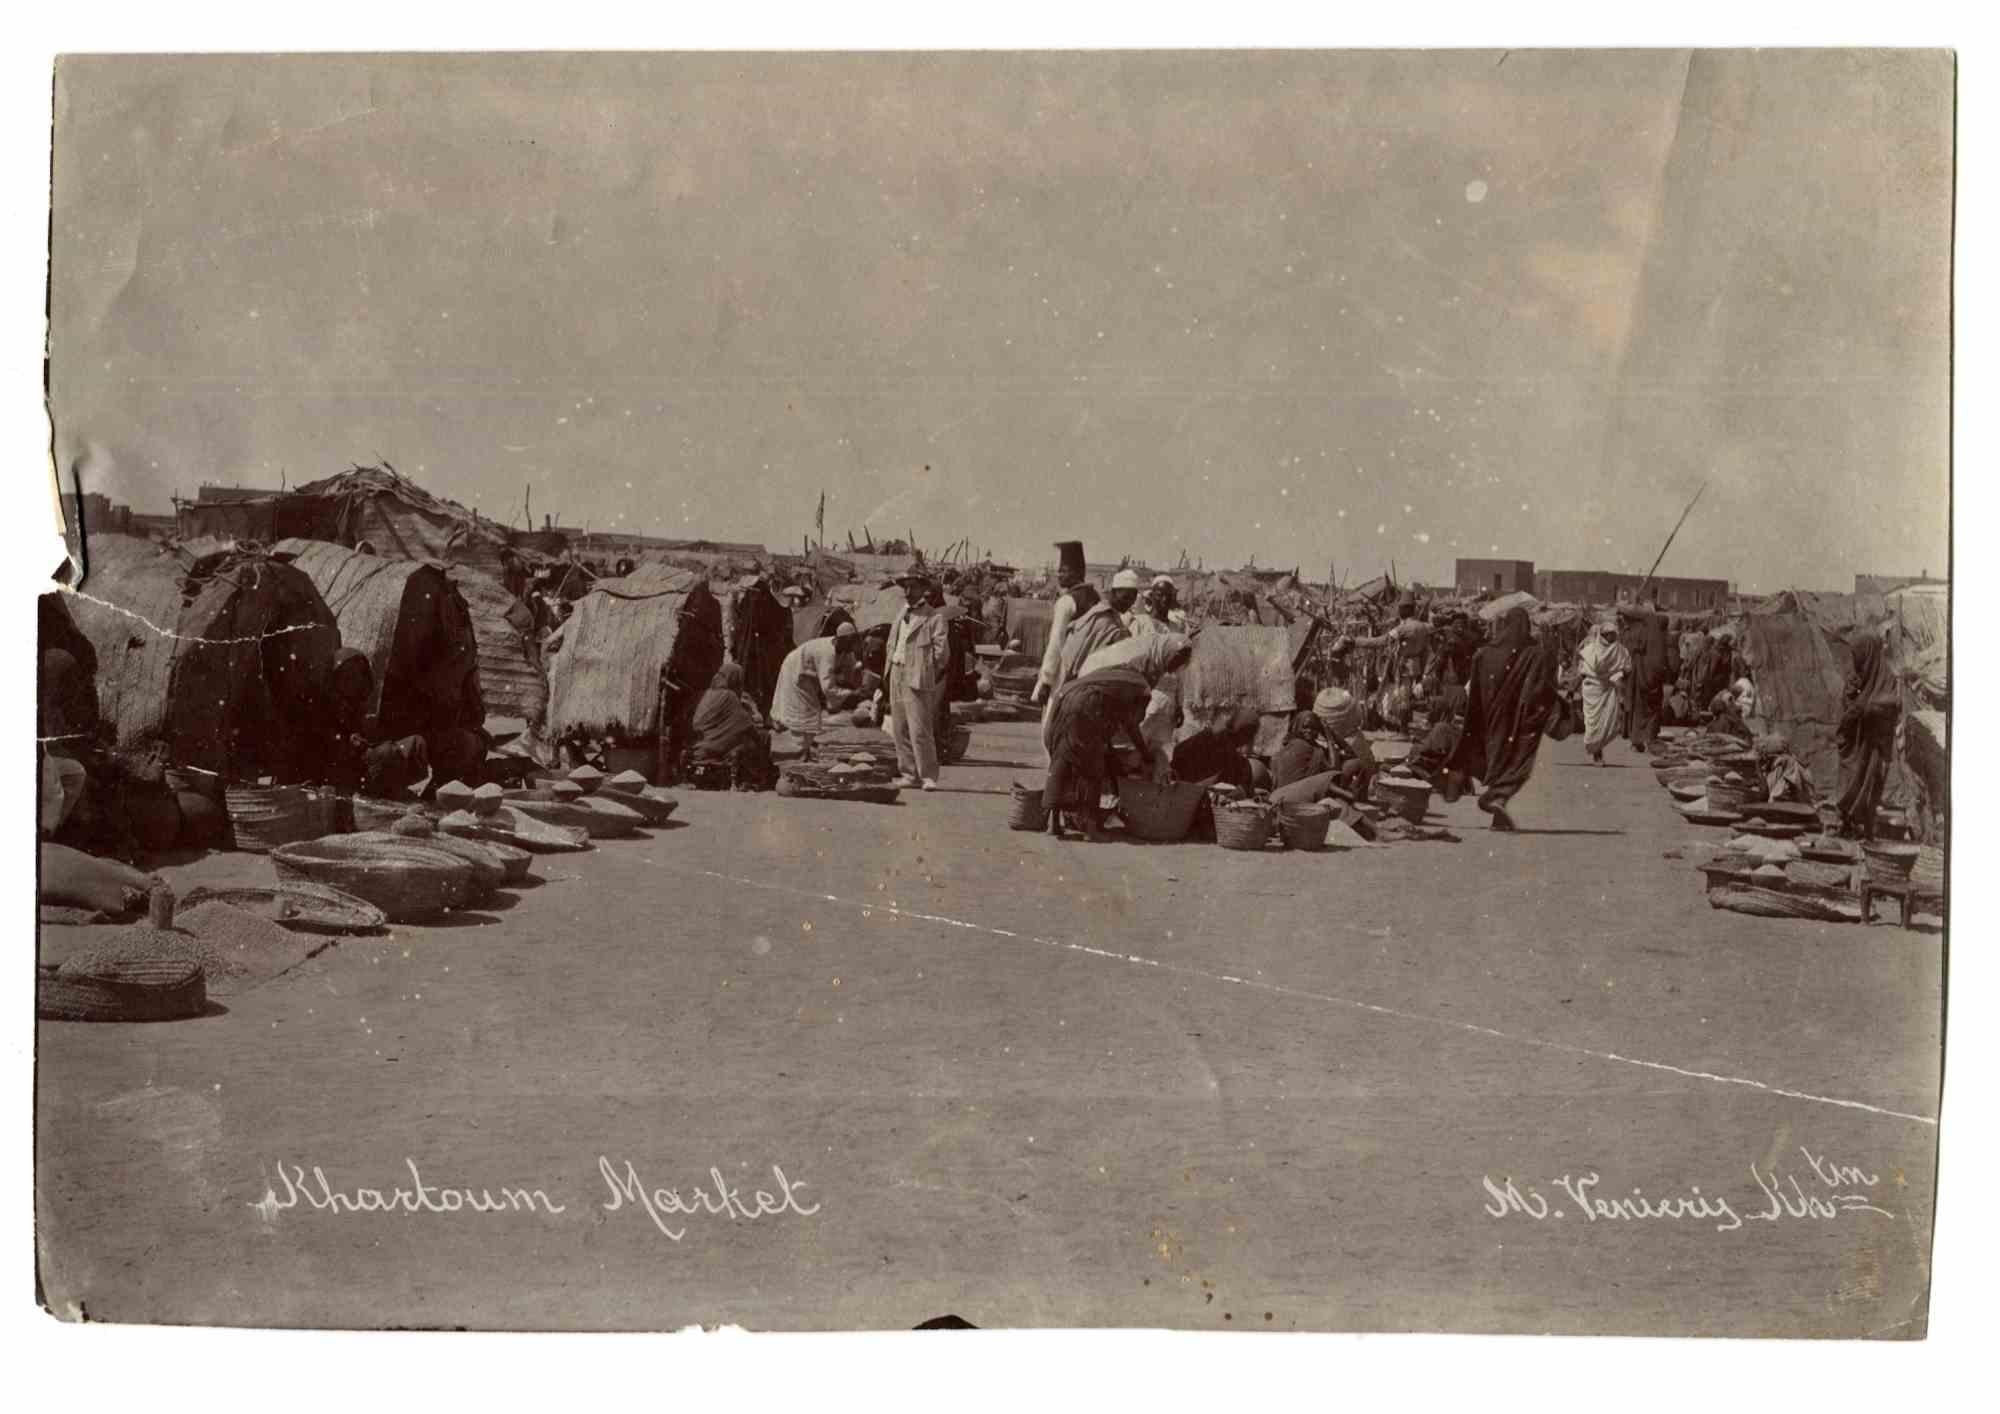 Khartum Market - Vintage Photo - Early 20th Century